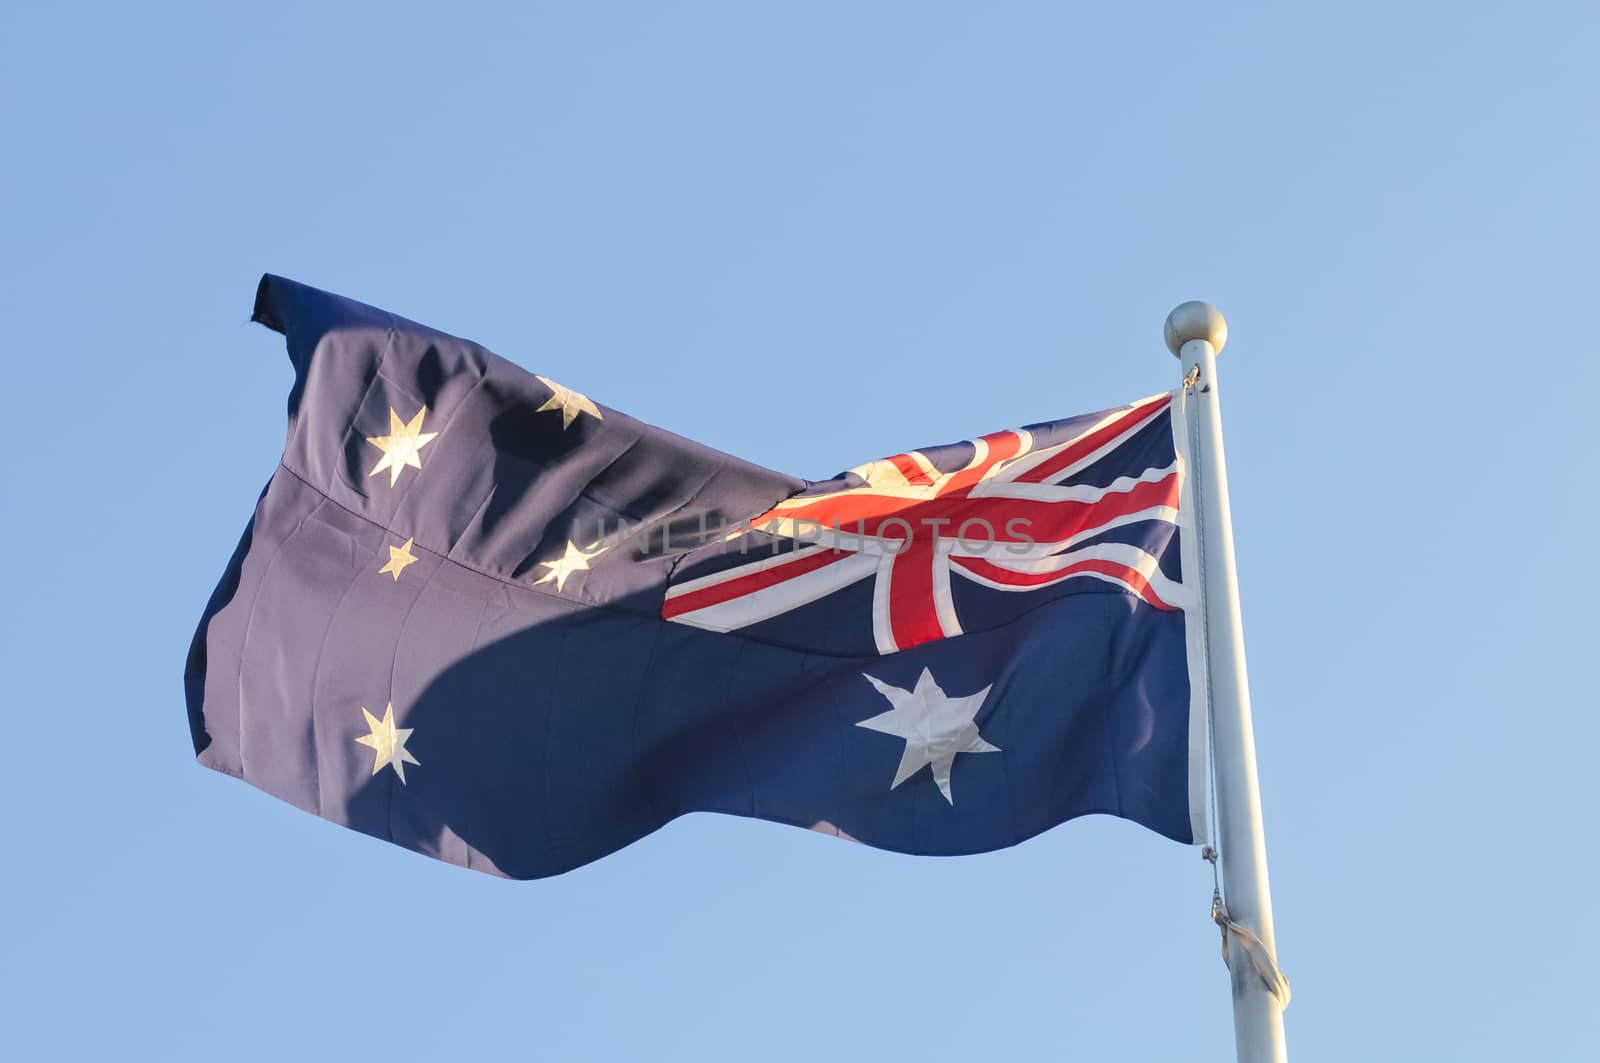 Waving Australia National Flag in windy day by eyeofpaul